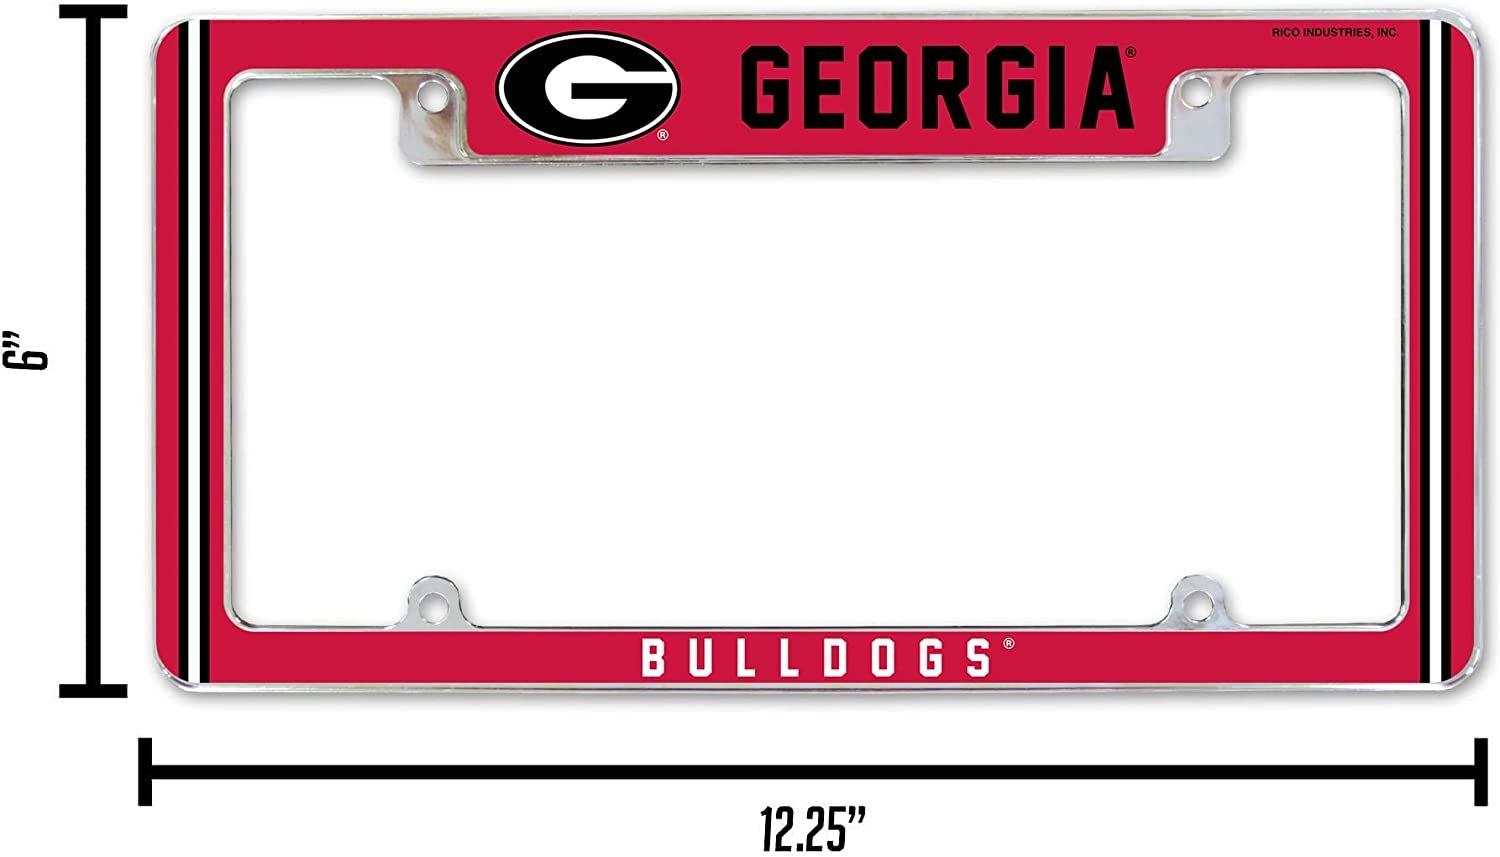 University of Georgia Bulldogs Metal License Plate Frame Chrome Tag Cover Alternate Design 6x12 Inch